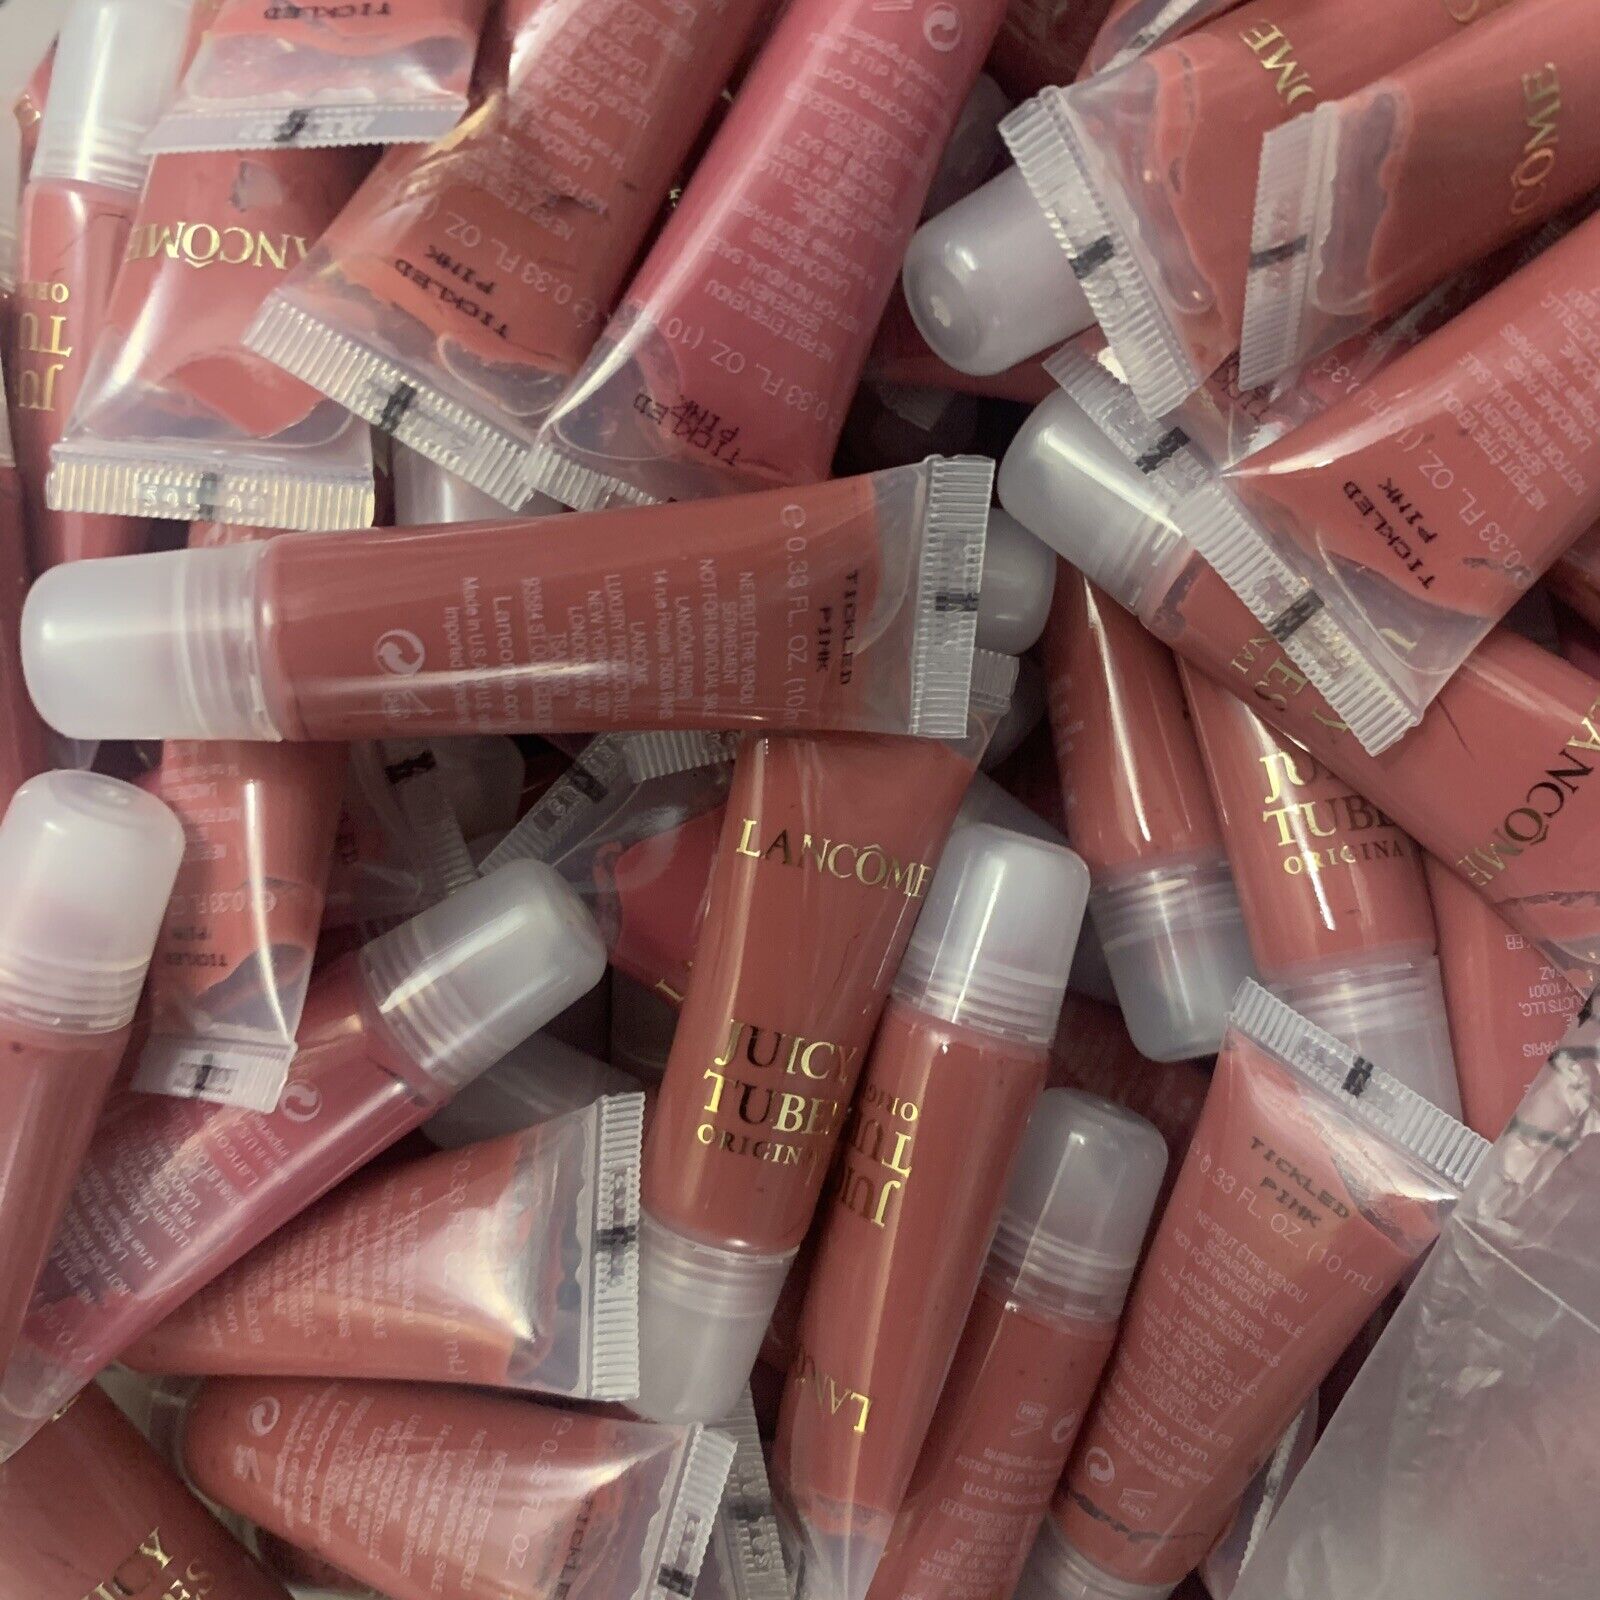 5 LANCOME Juicy Tubes Original lip gloss Tickled Pink travel lot 0.33 oz 10 ml Lancôme Tubes